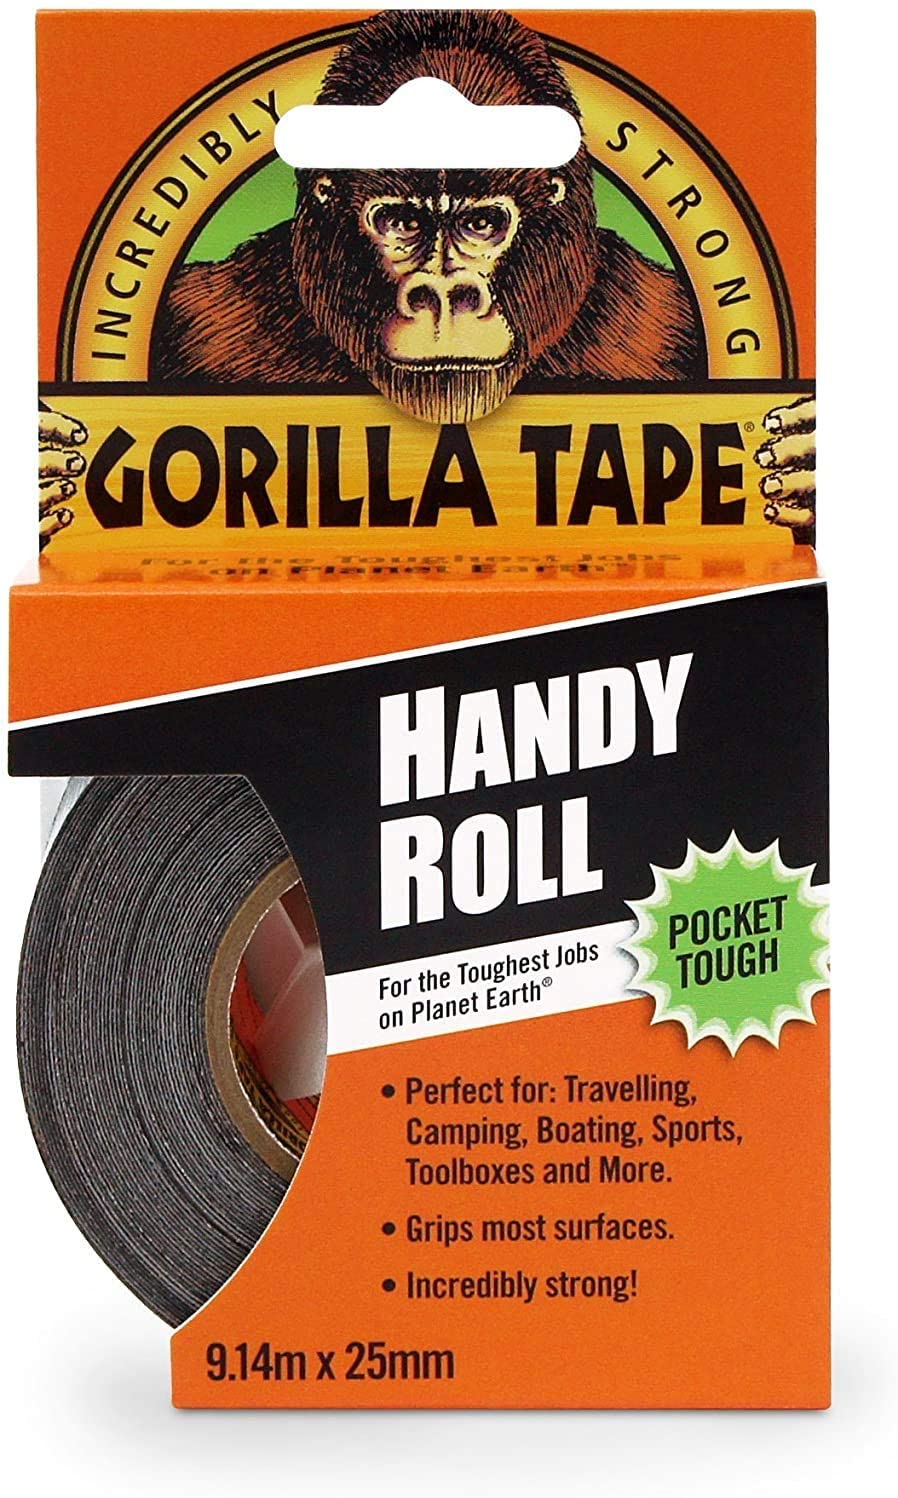 Gorilla Tape Handy Roll Black 9.14m x 25mm Pocket Tough